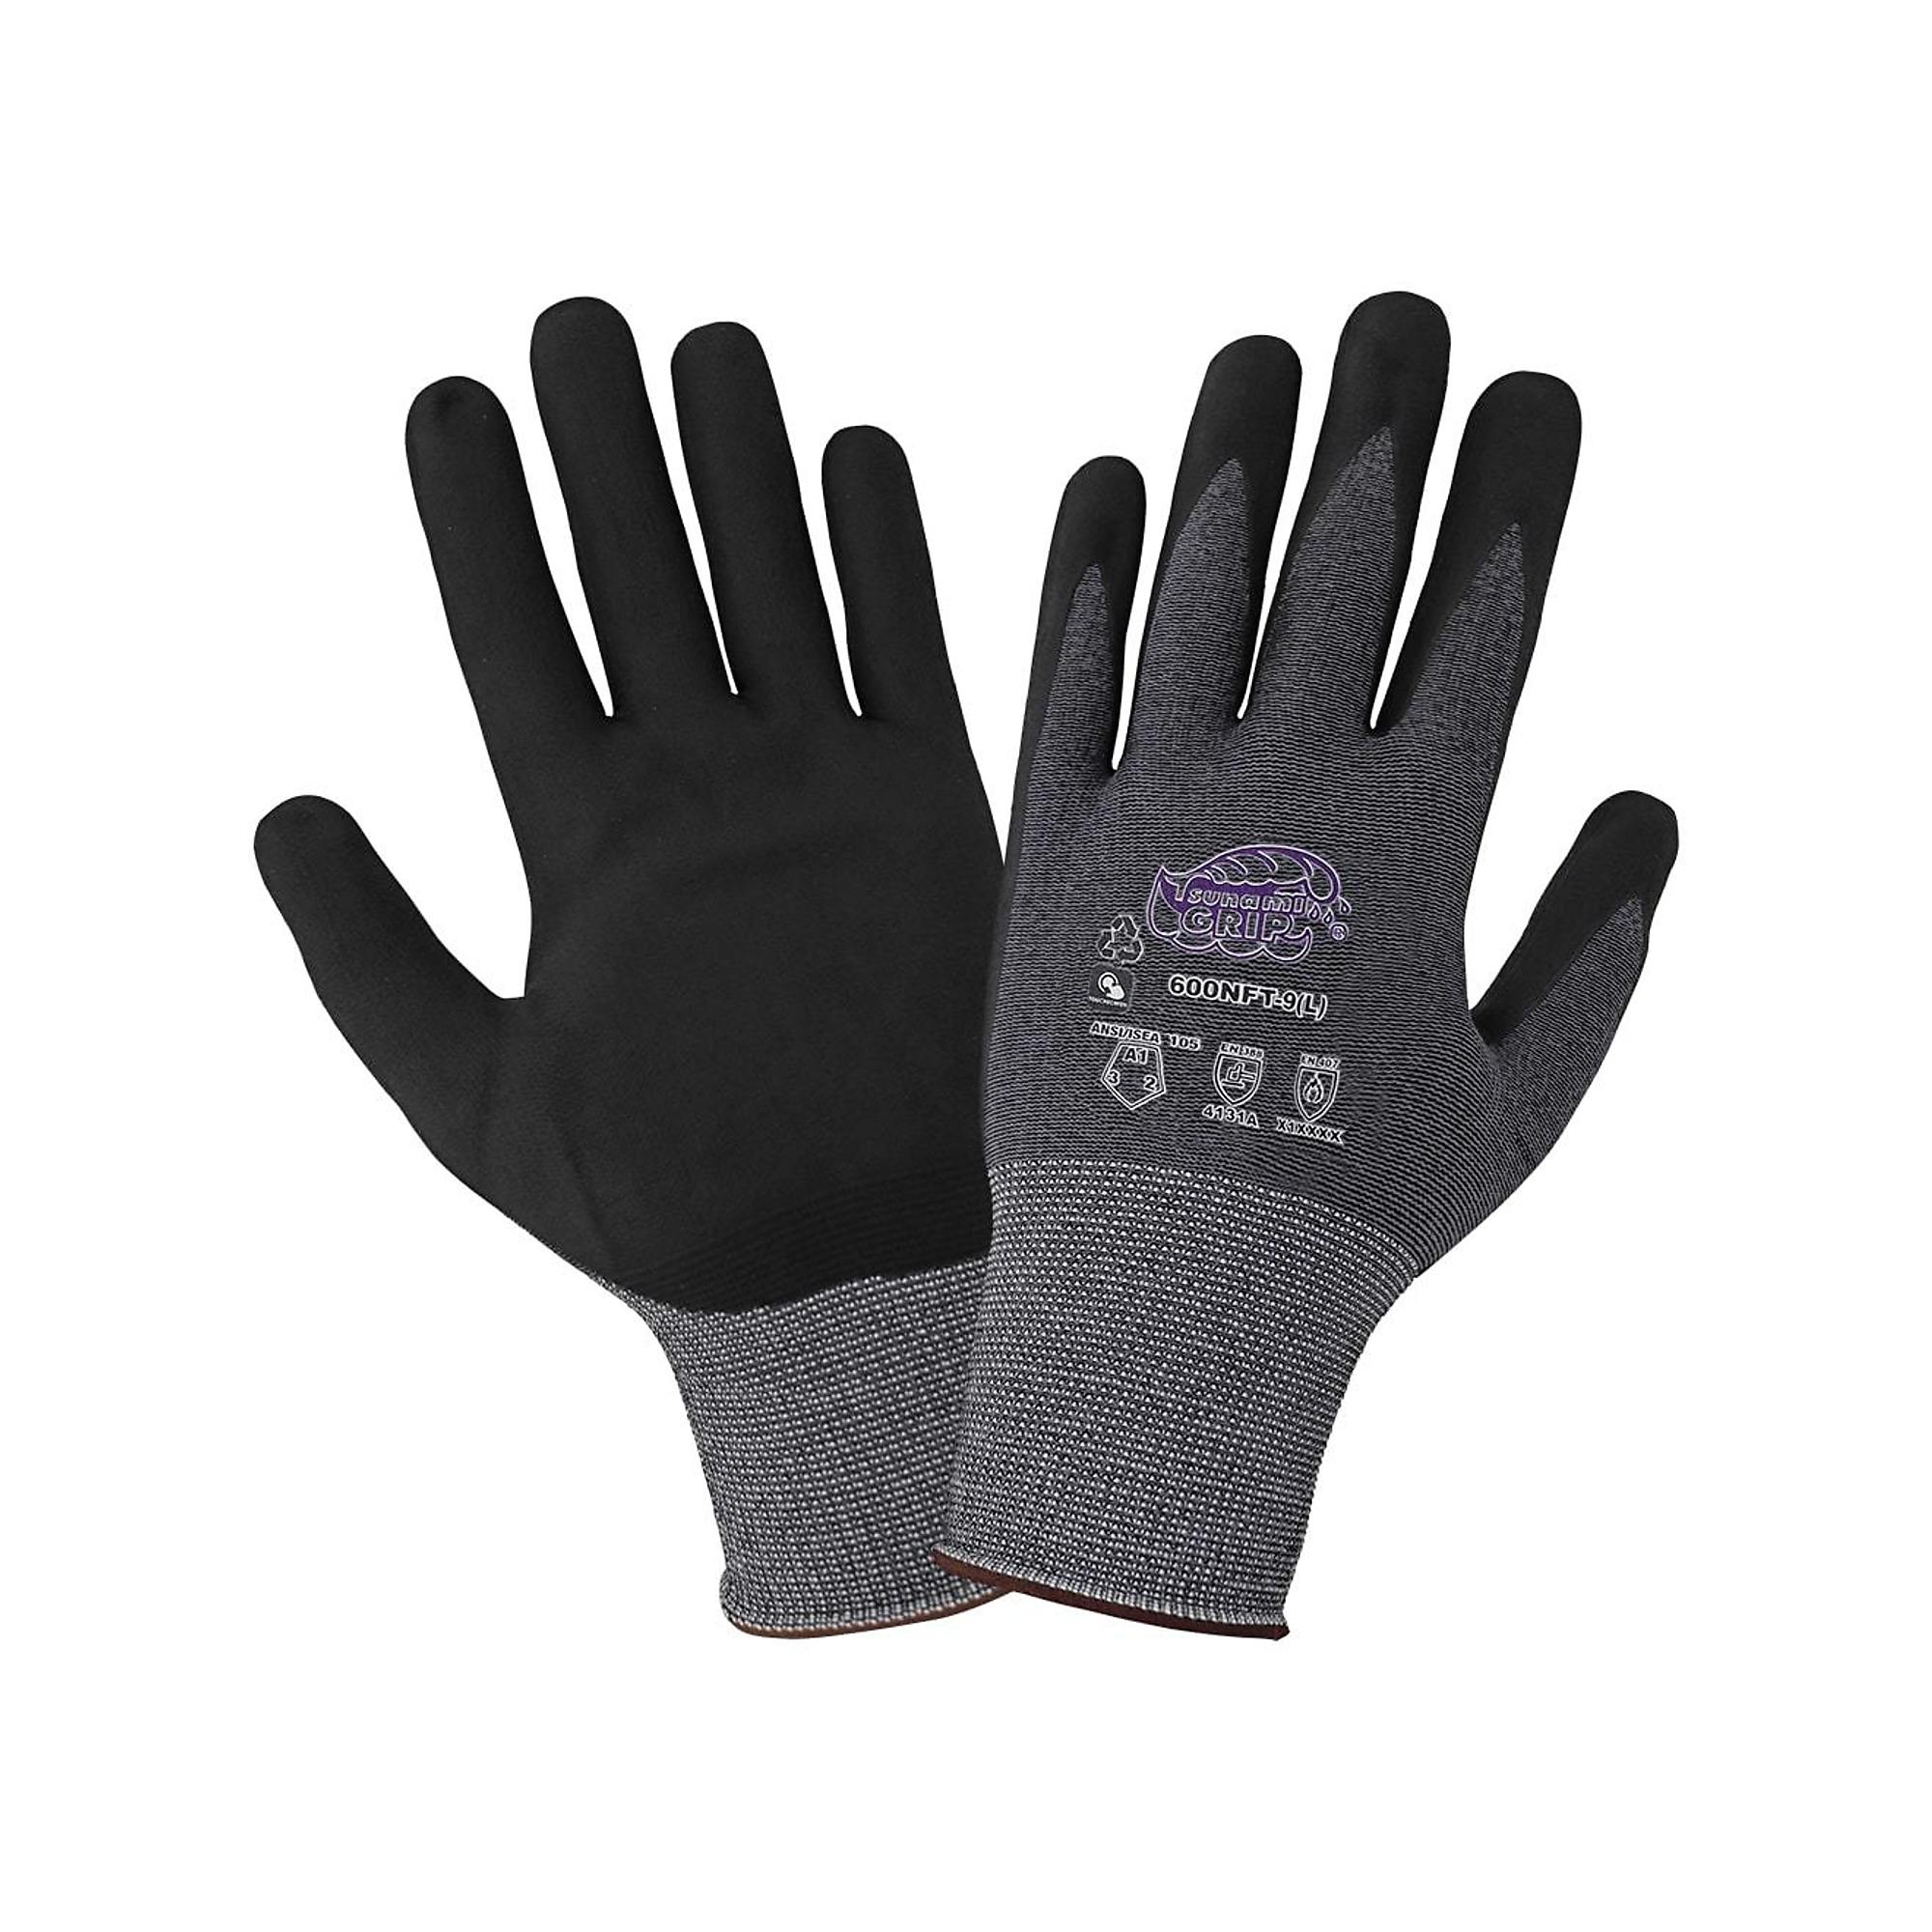 Global Glove Tsunami Grip , Tsunami Grip Lightweight, Foam Nitrile Gloves - 12 Pairs, Size L, Color Gray, Included (qty.) 12 Model 600NFT-10(XL)